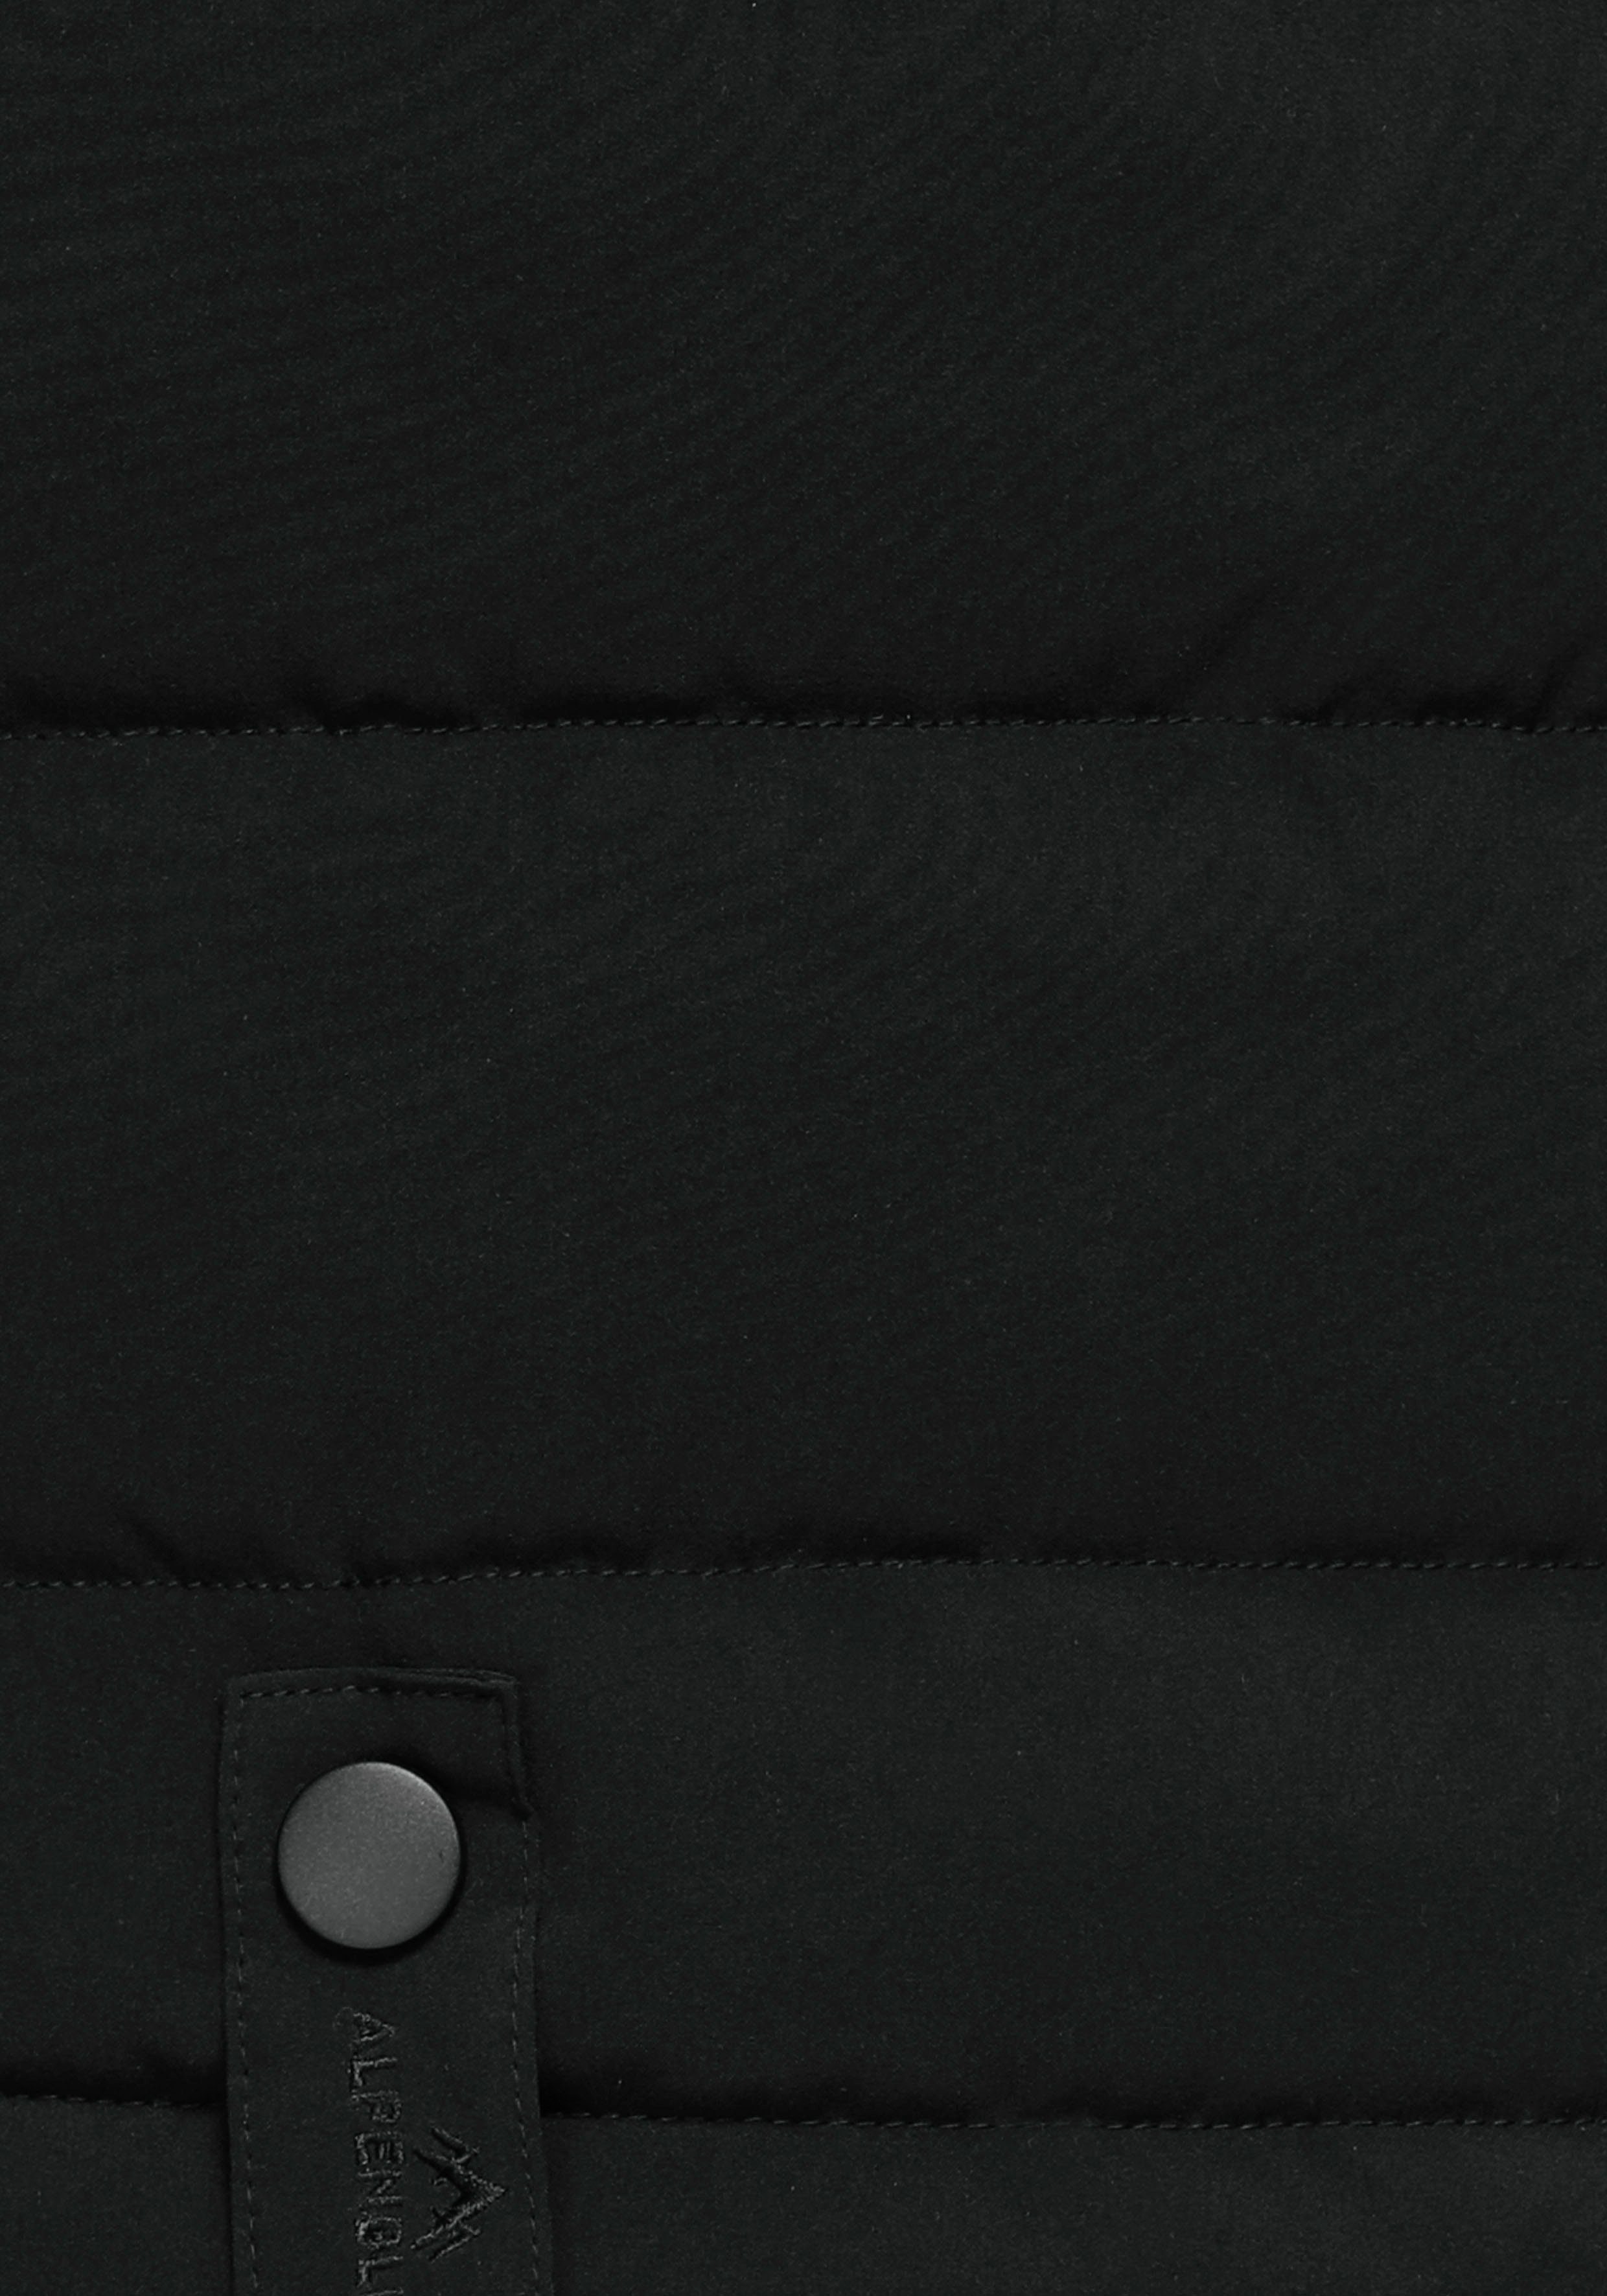 ALPENBLITZ Steppmantel mit auf abnehmbarer Material) Gürtel Kuschel-Kapuze nachhaltigem long (Jacke aus Mantel dem Markenprägung Oslo & black